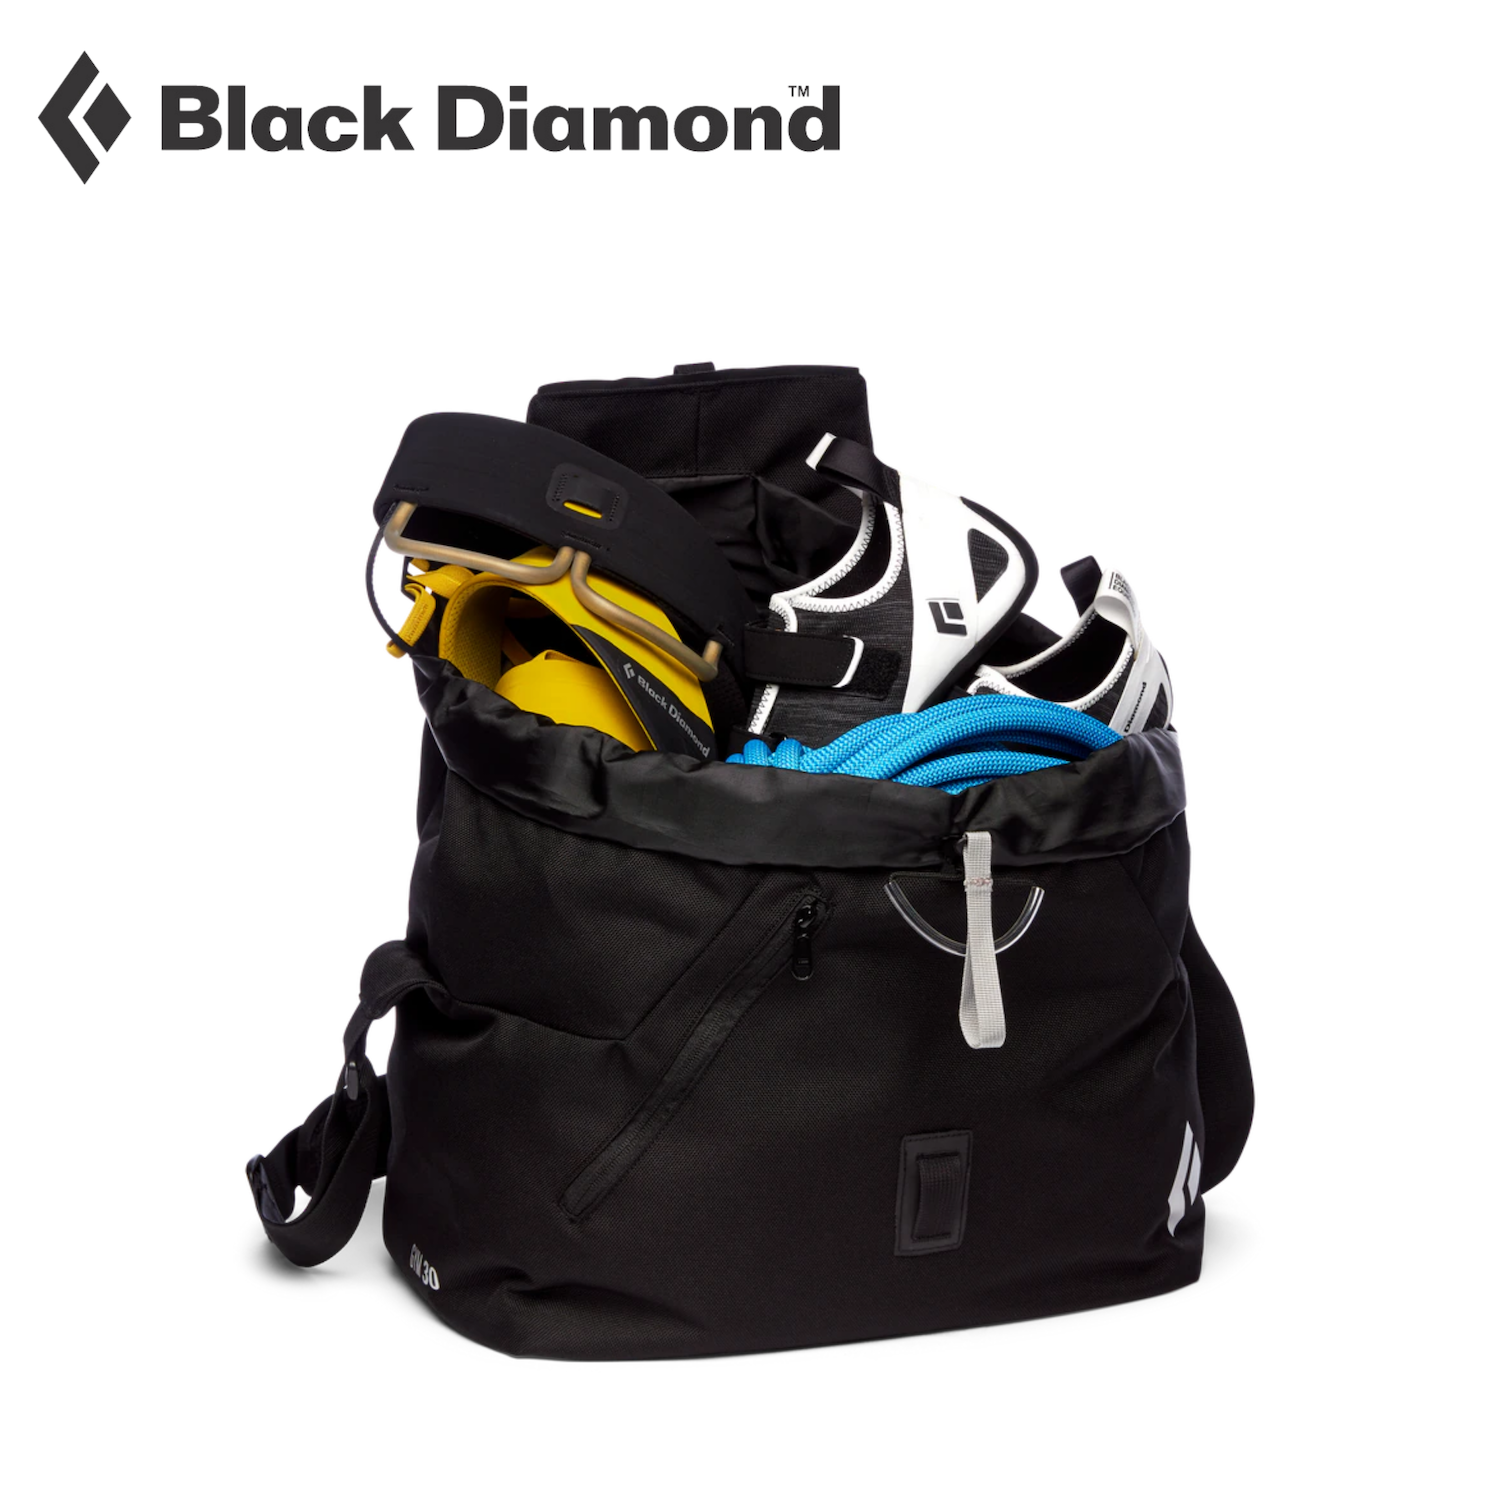 Black Diamond Gym Gear Bag